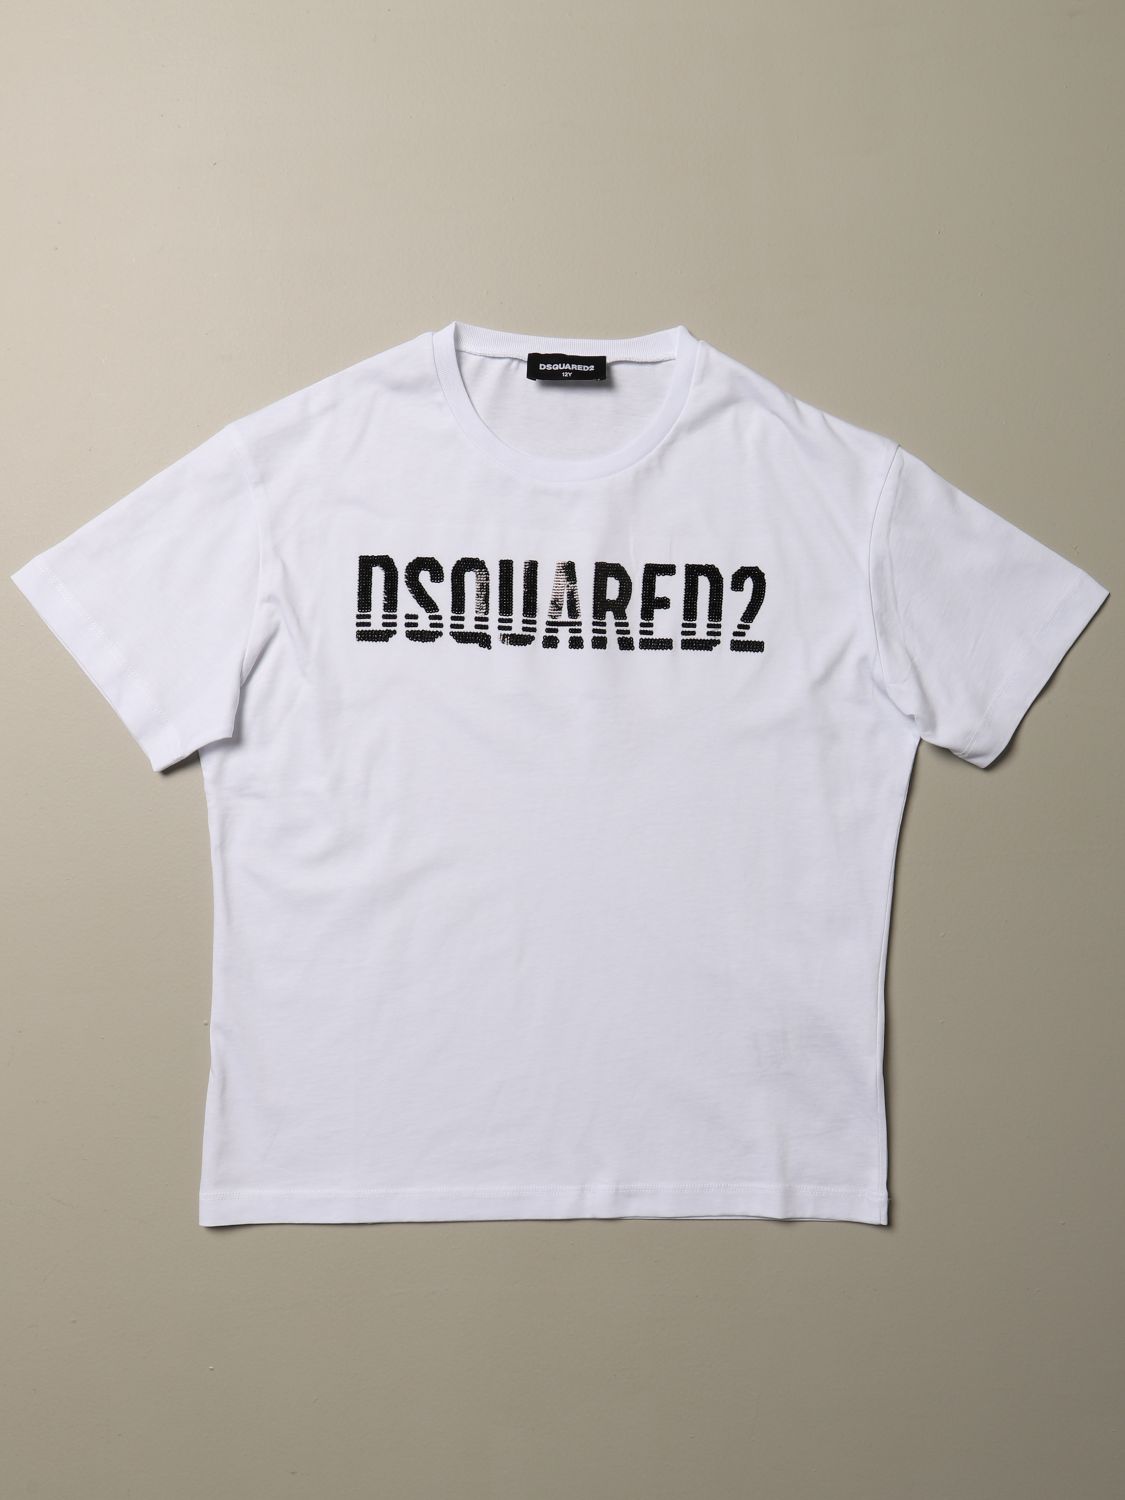 dsquared2 shirts juniors